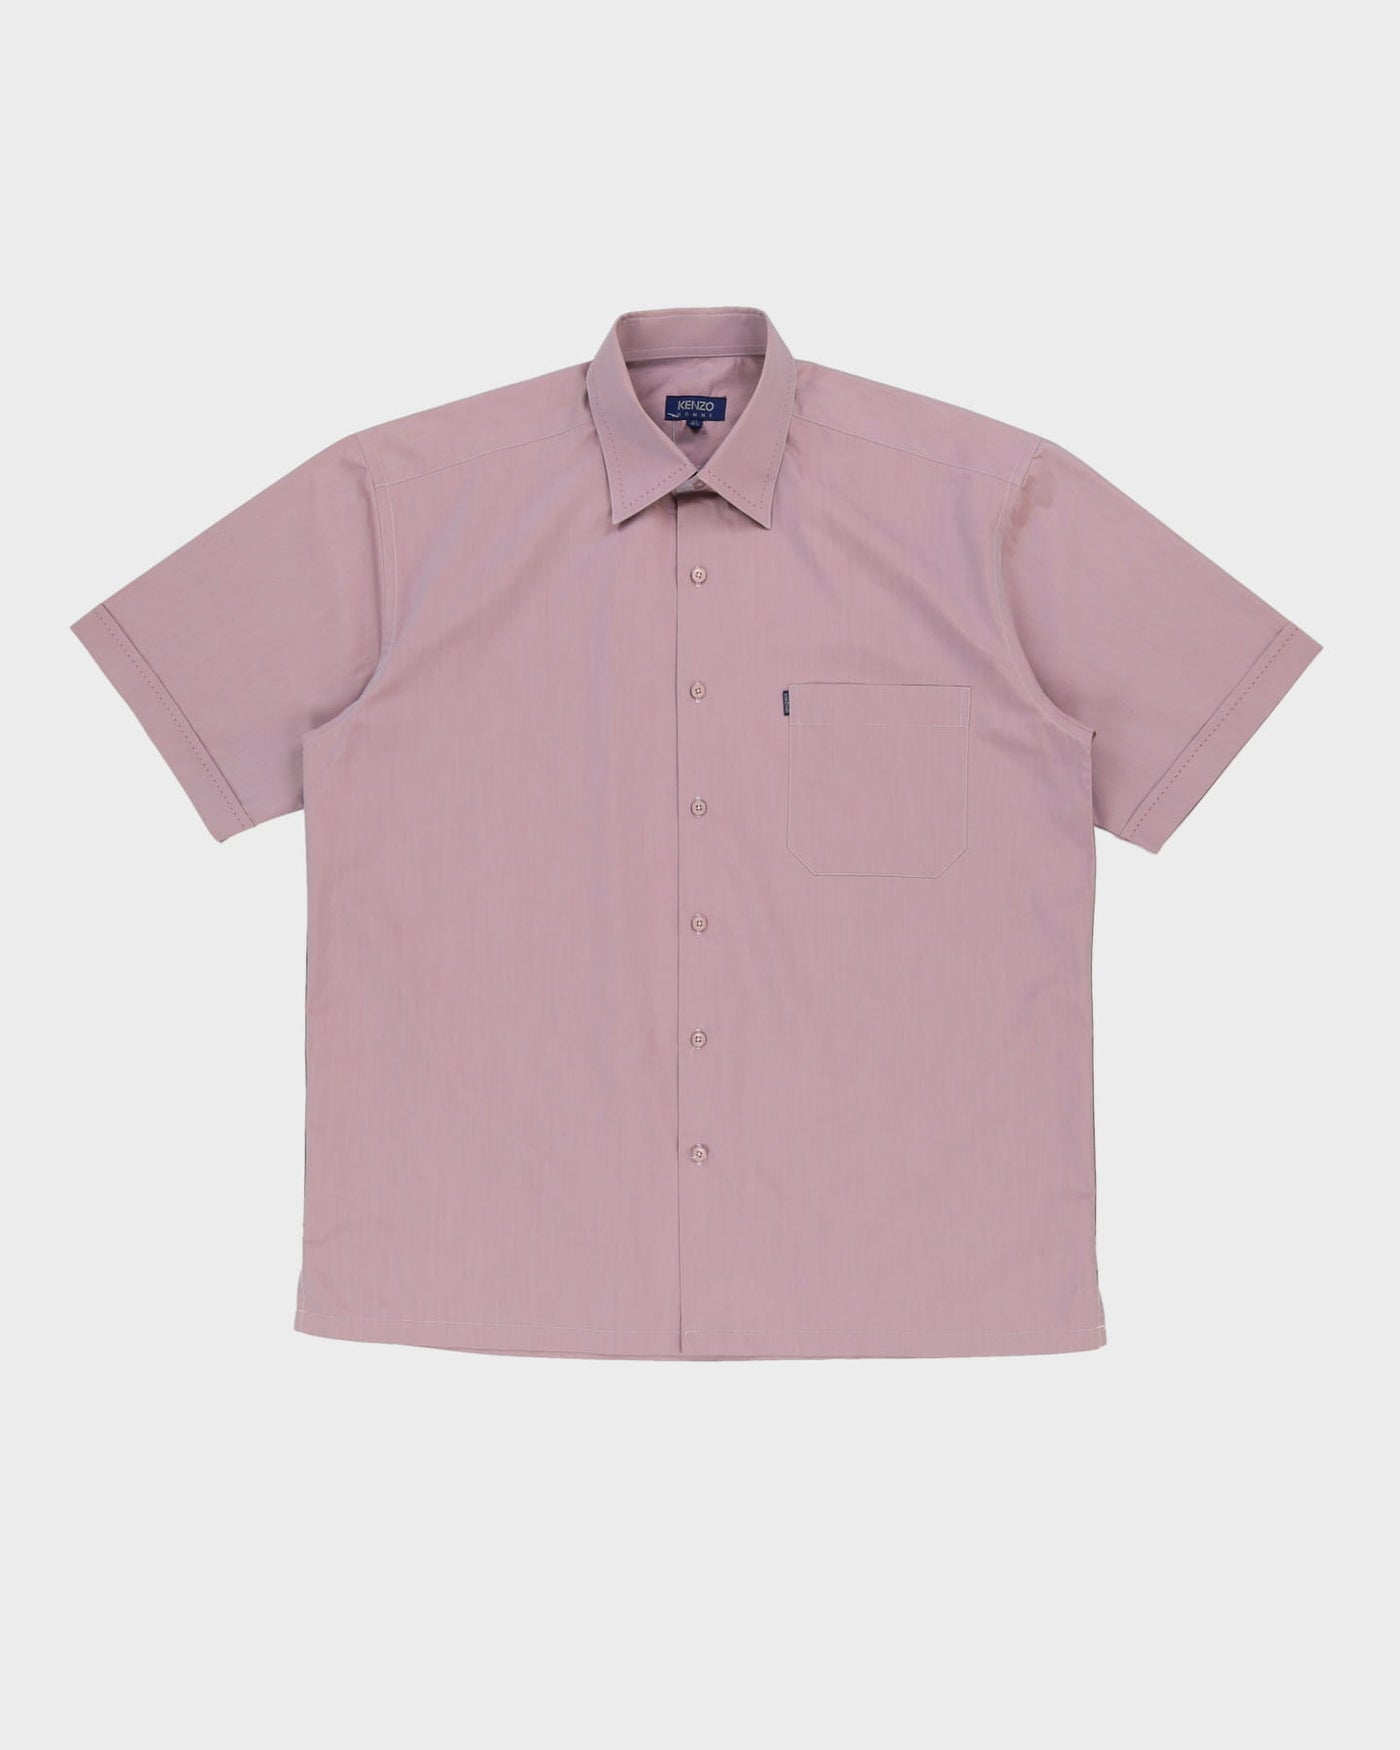 Kenzo Purple Shiny Short Sleeve Shirt - XL